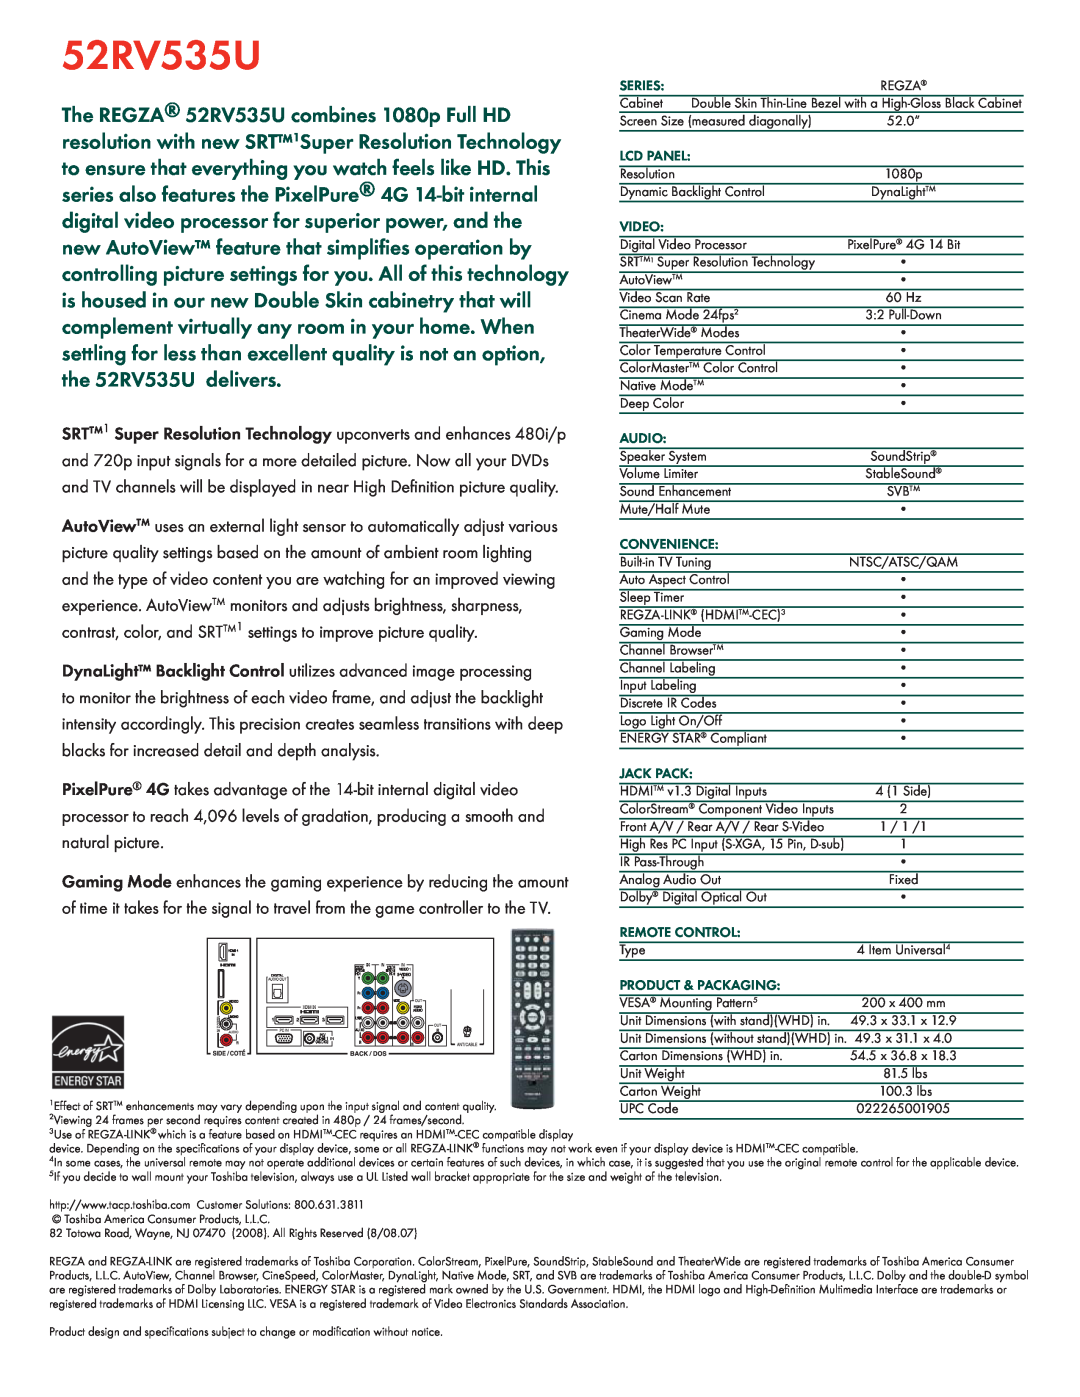 Toshiba SRTTM1 manual 52RV535U, Series, Video, Audio, Convenience, Jack Pack, Remote Control, Product & Packaging 